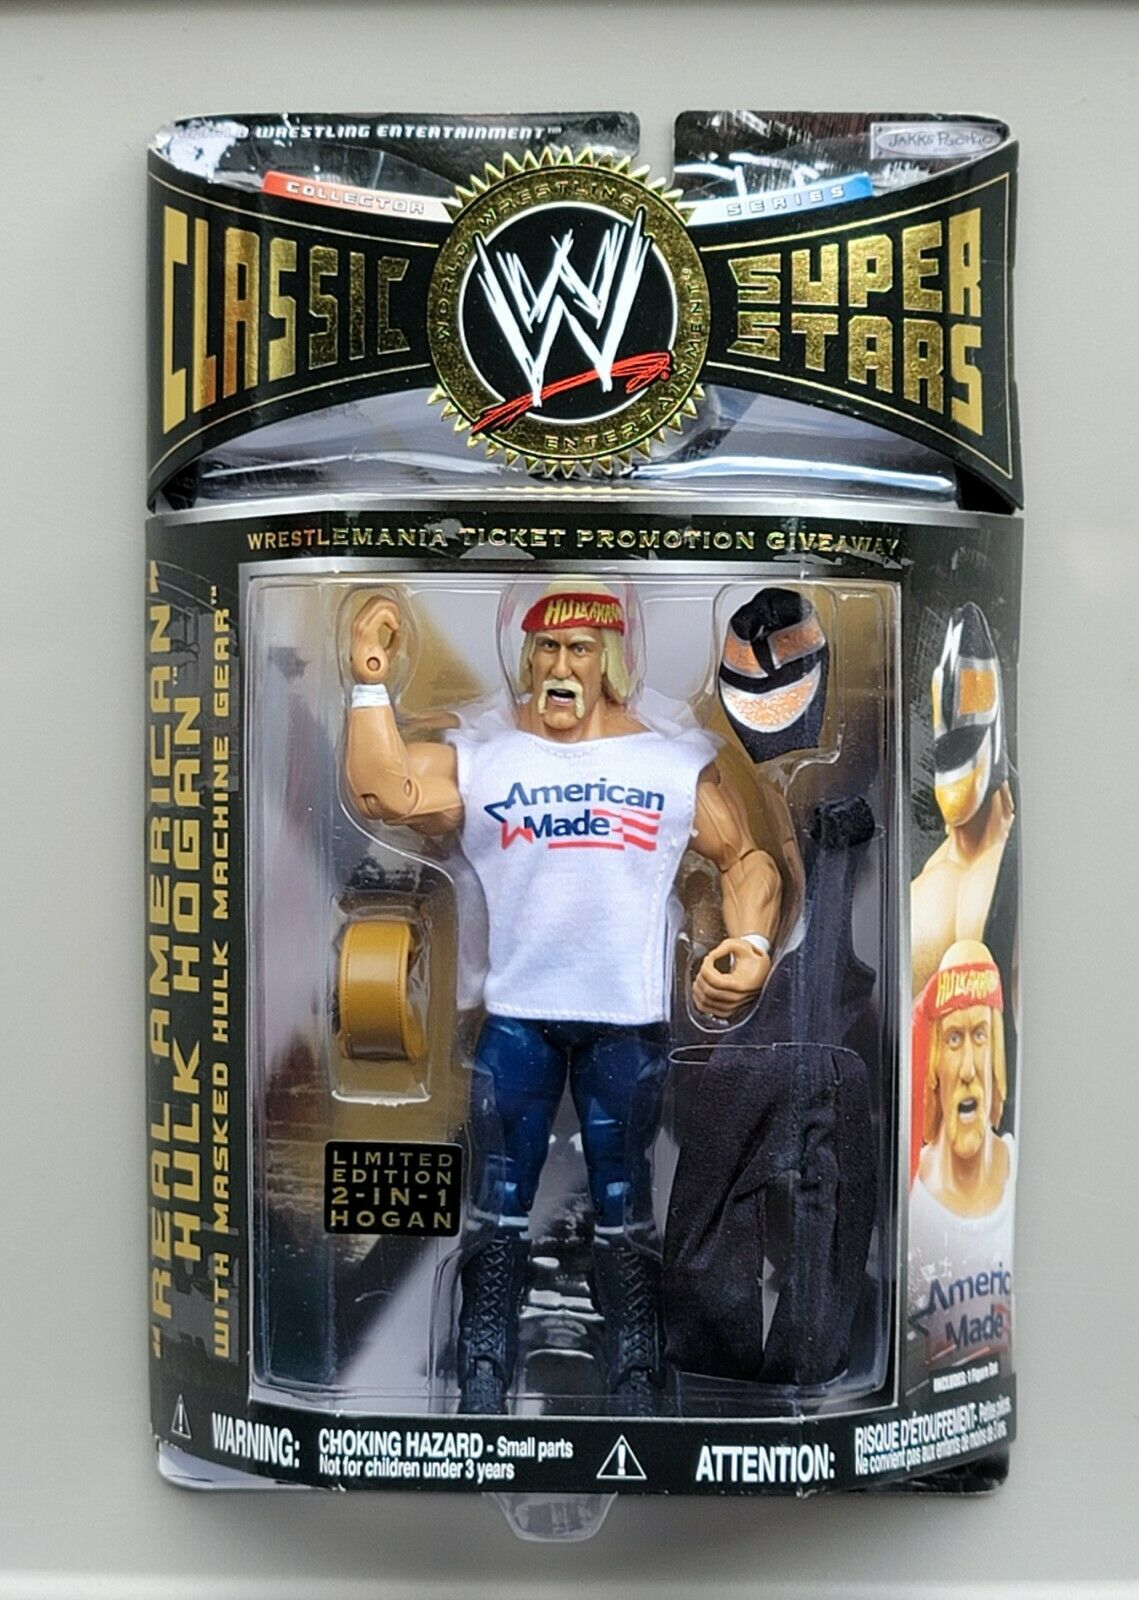 2006 WWE Jakks Pacific Classic Superstars "Real American" Hulk Hogan with Masked Hulk Machine Gear [Exclusive]